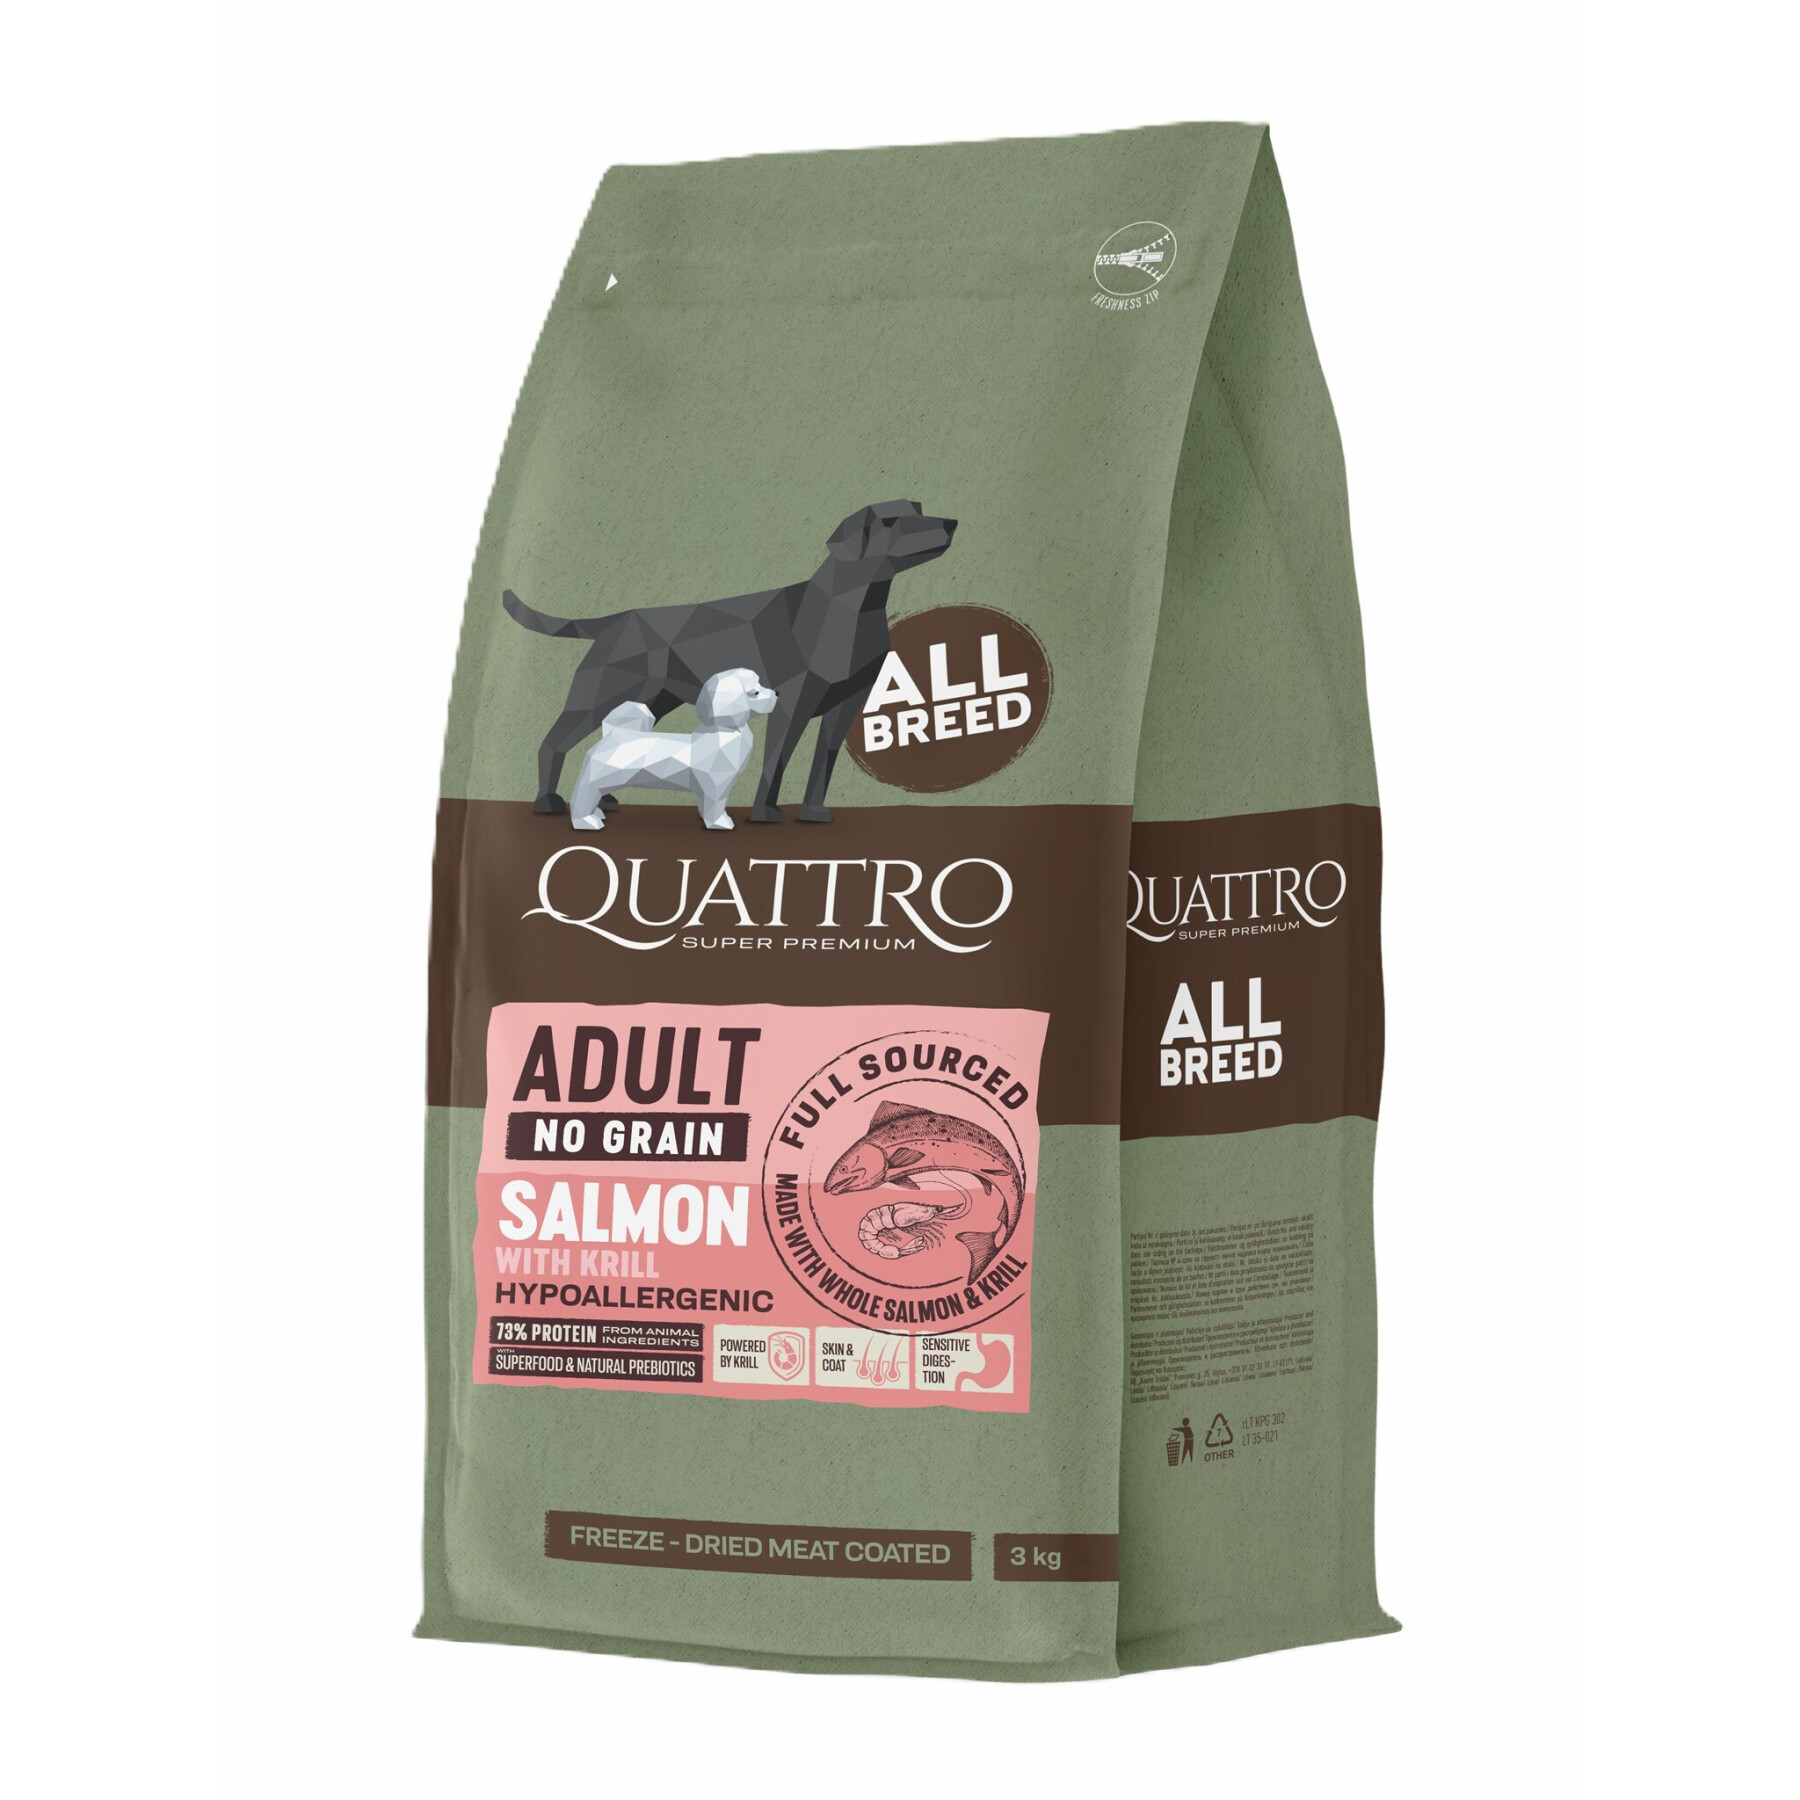 Grain-free salmon and krill dog food for all breeds BUBU Pets Quatro Super Premium